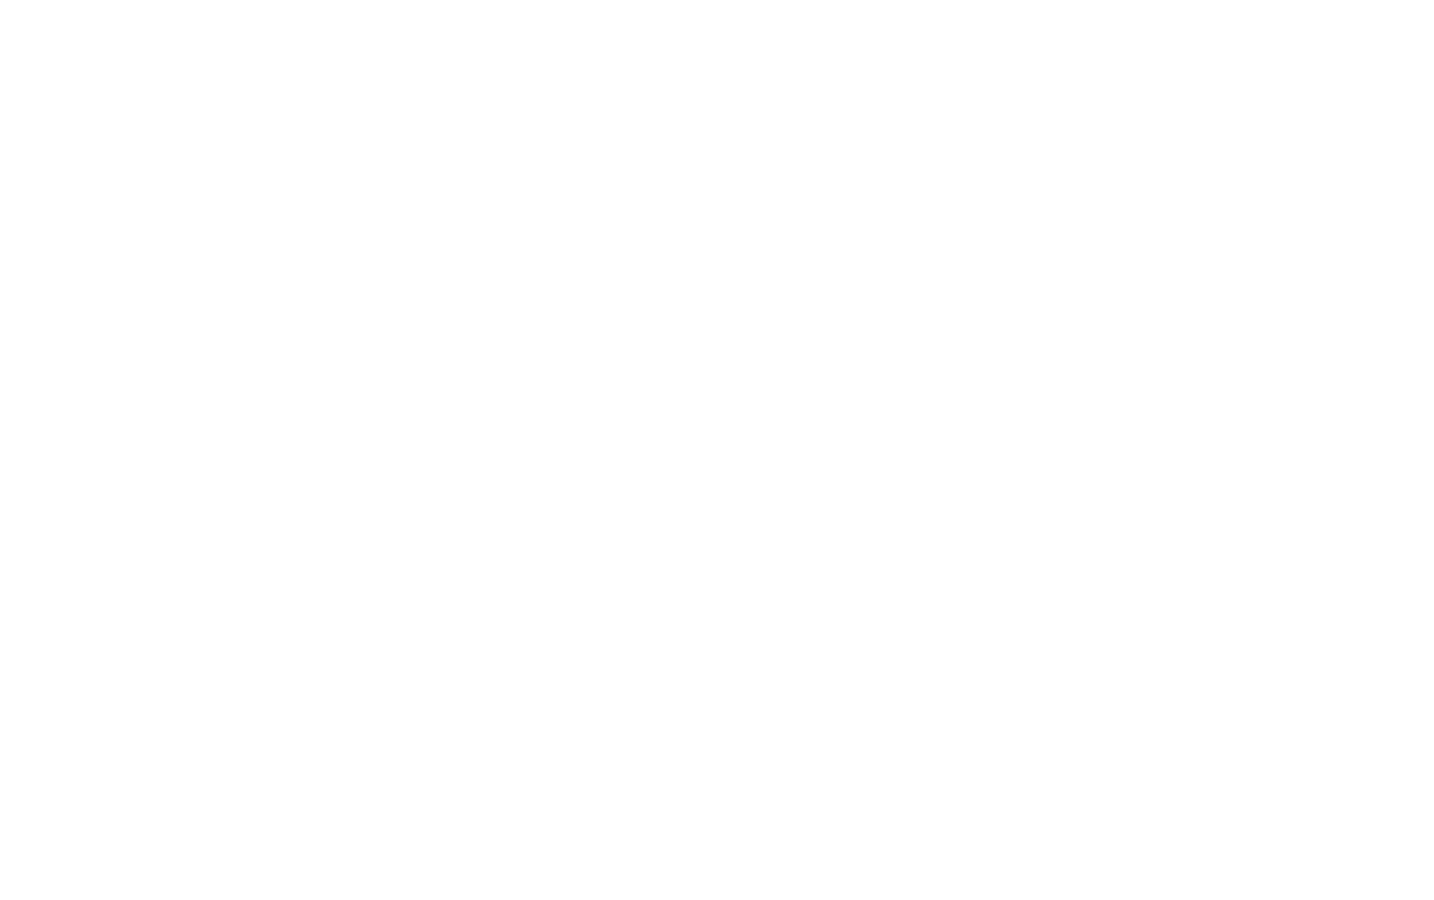 Clubs Logo - Home - Union League Boys & Girls Clubs